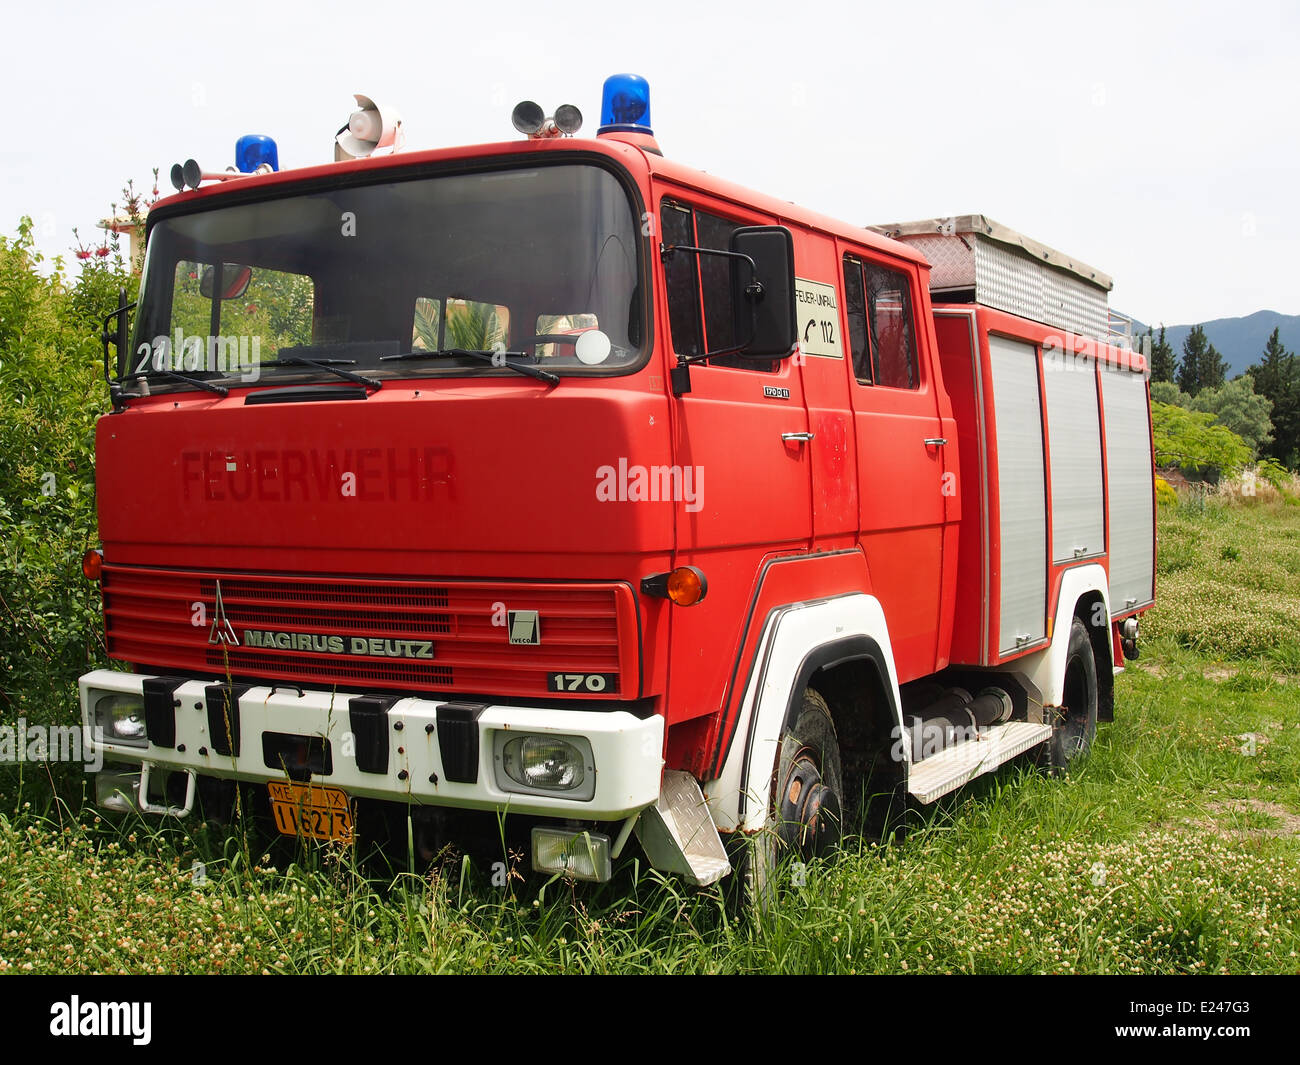 Magirus Deutz 170 fire engine dumped in Vasiliki, Greece Stock Photo - Alamy